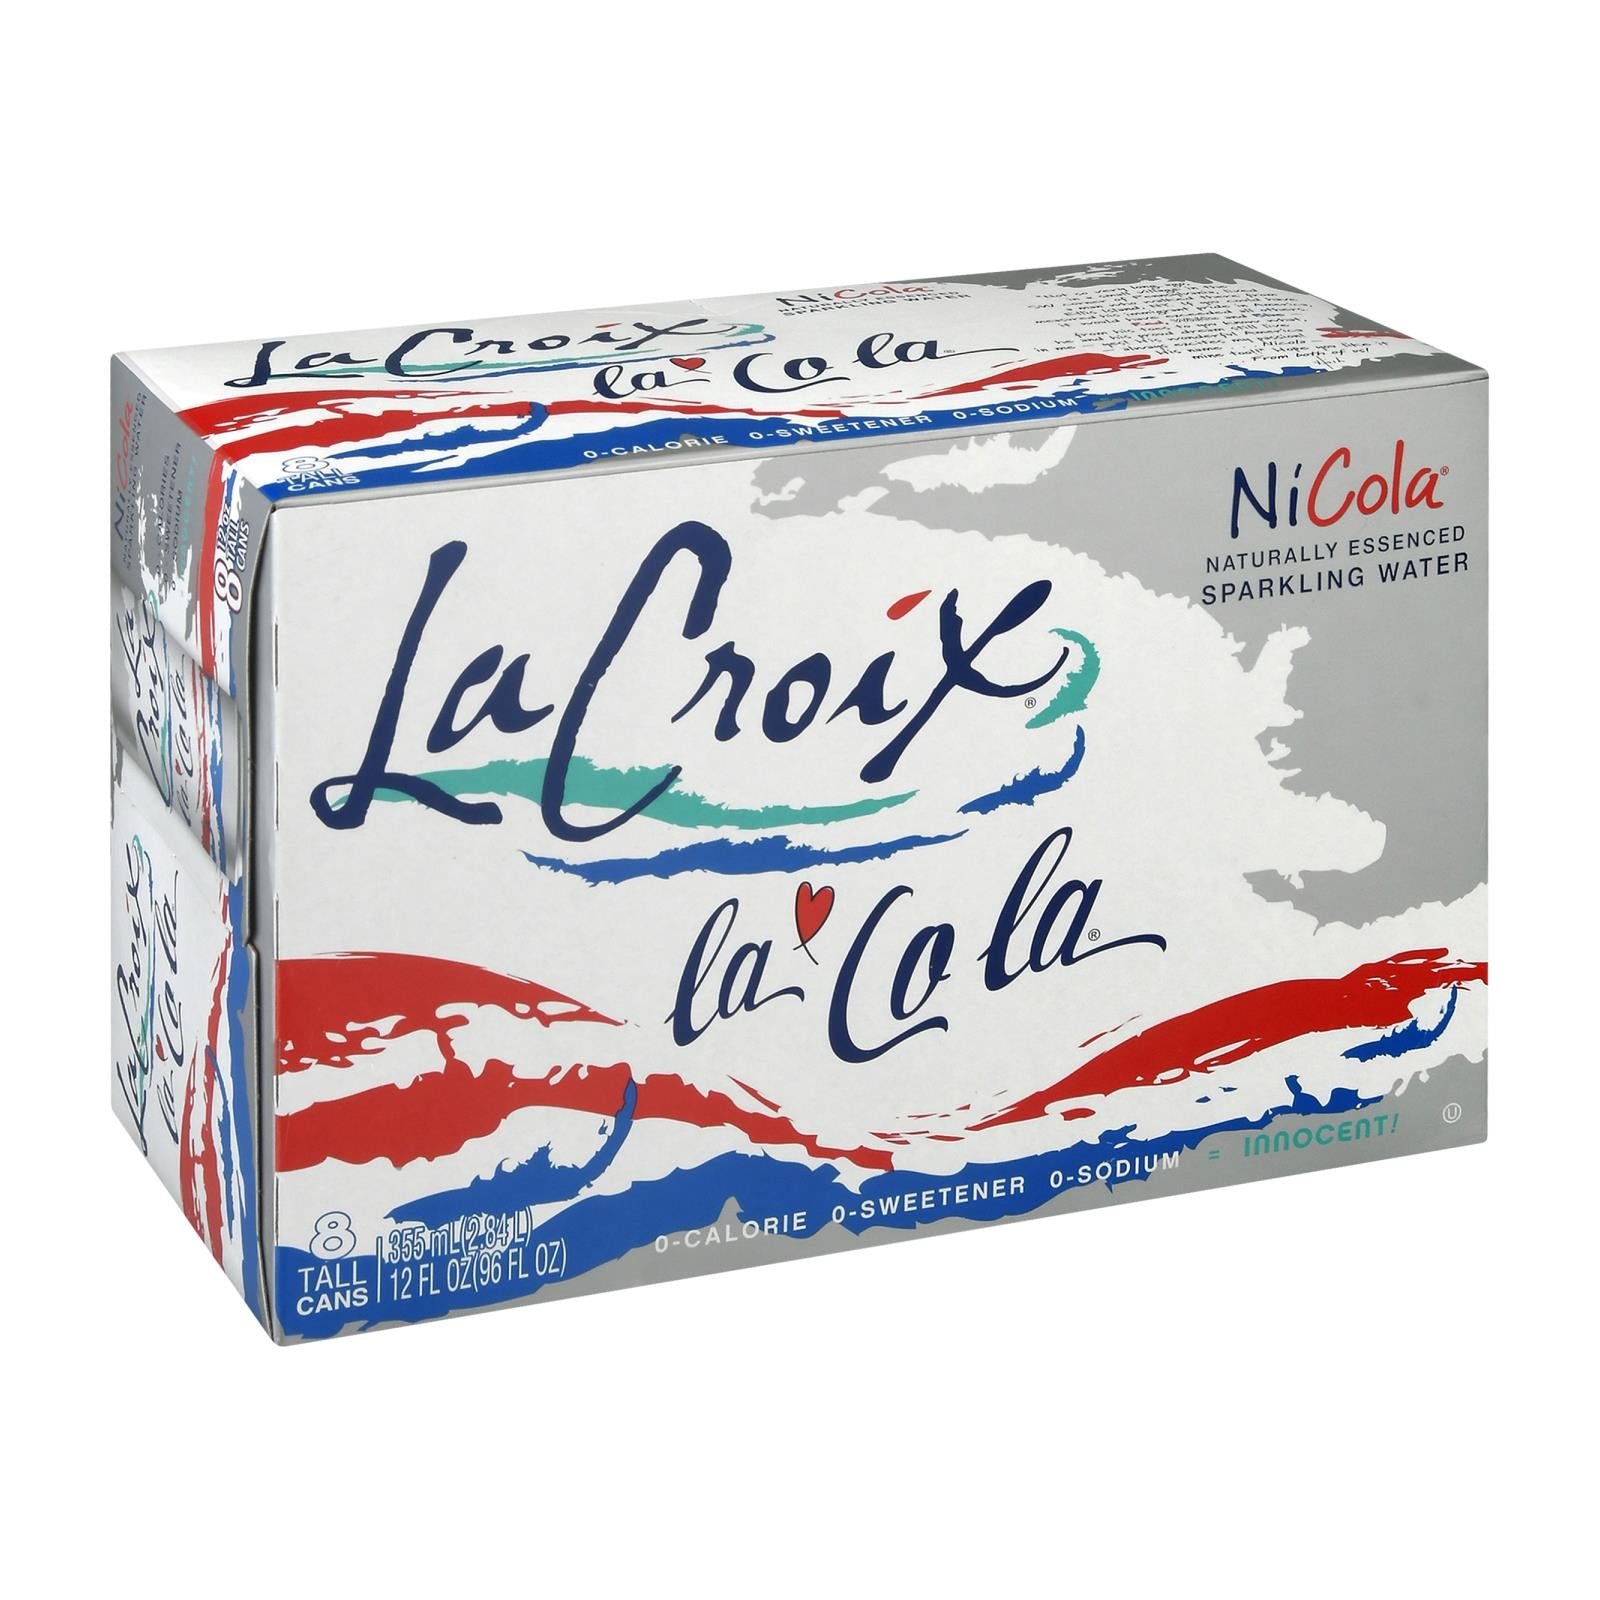 Lacroix Sparkling Water - Nicola - Case of 3 - 8/12 fl oz